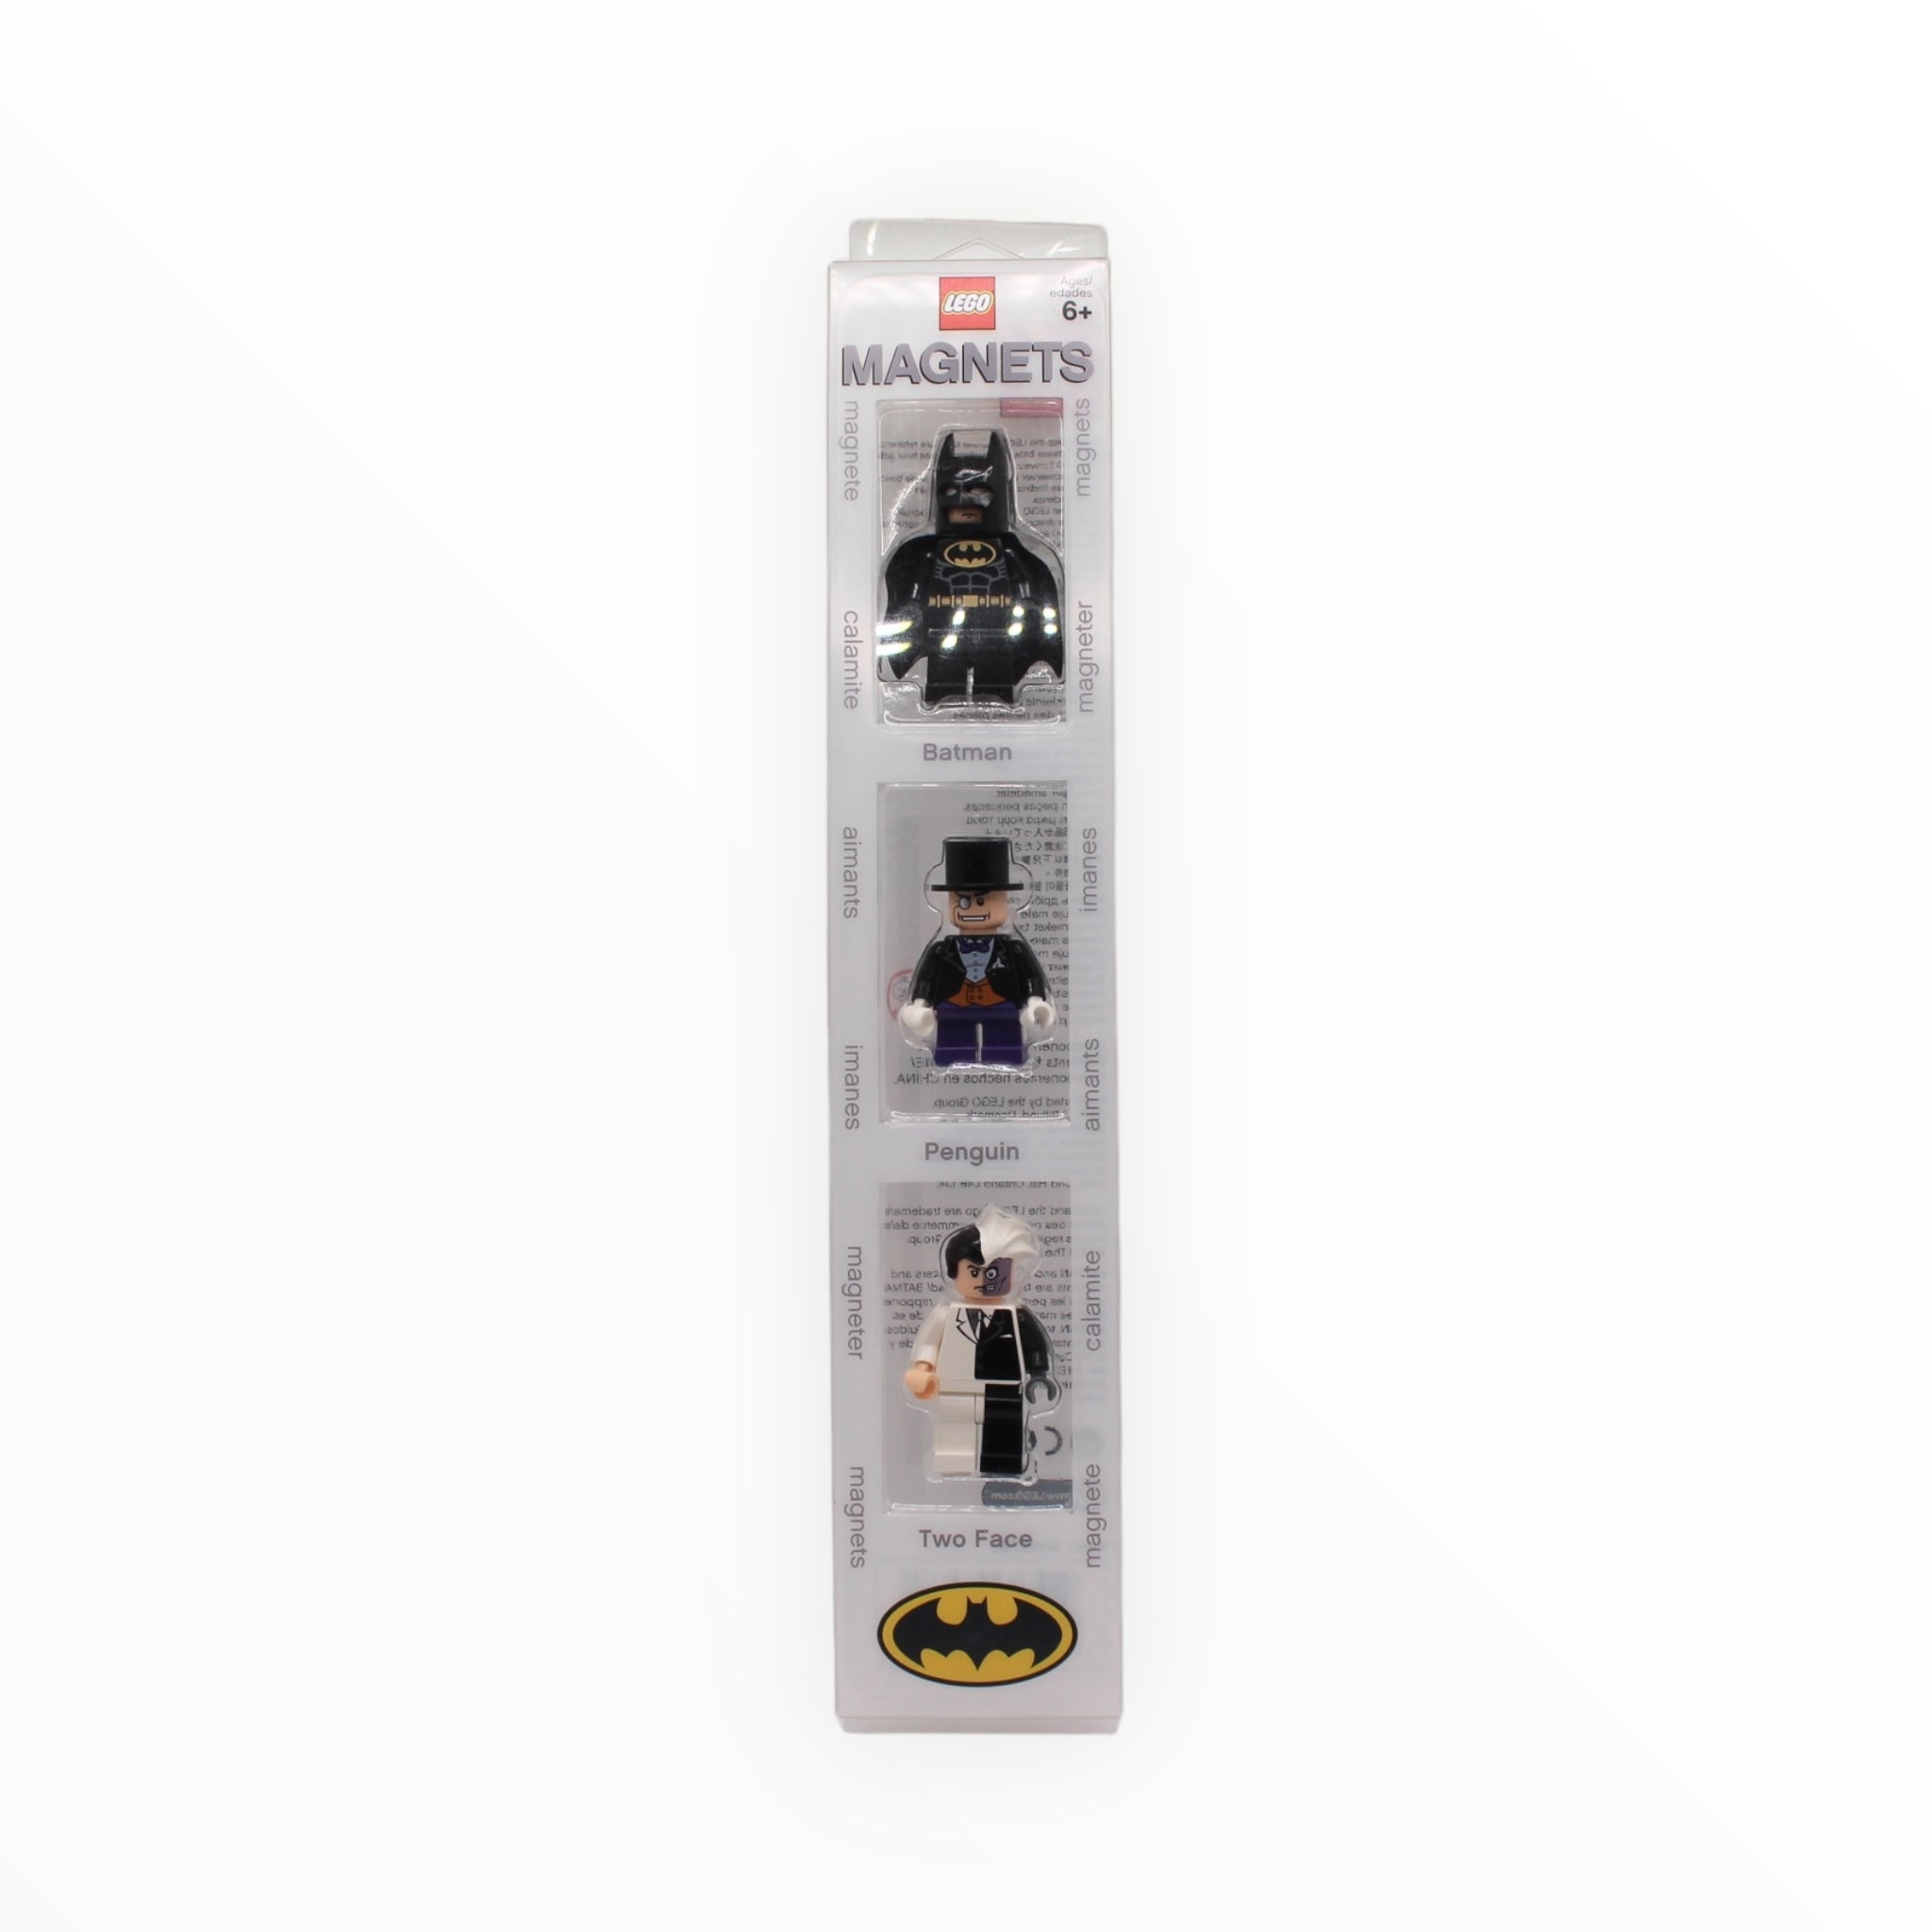 Retired Set 4493780 LEGO Batman Magnet Set - Batman, Penguin, and Two-Face Blister Pack